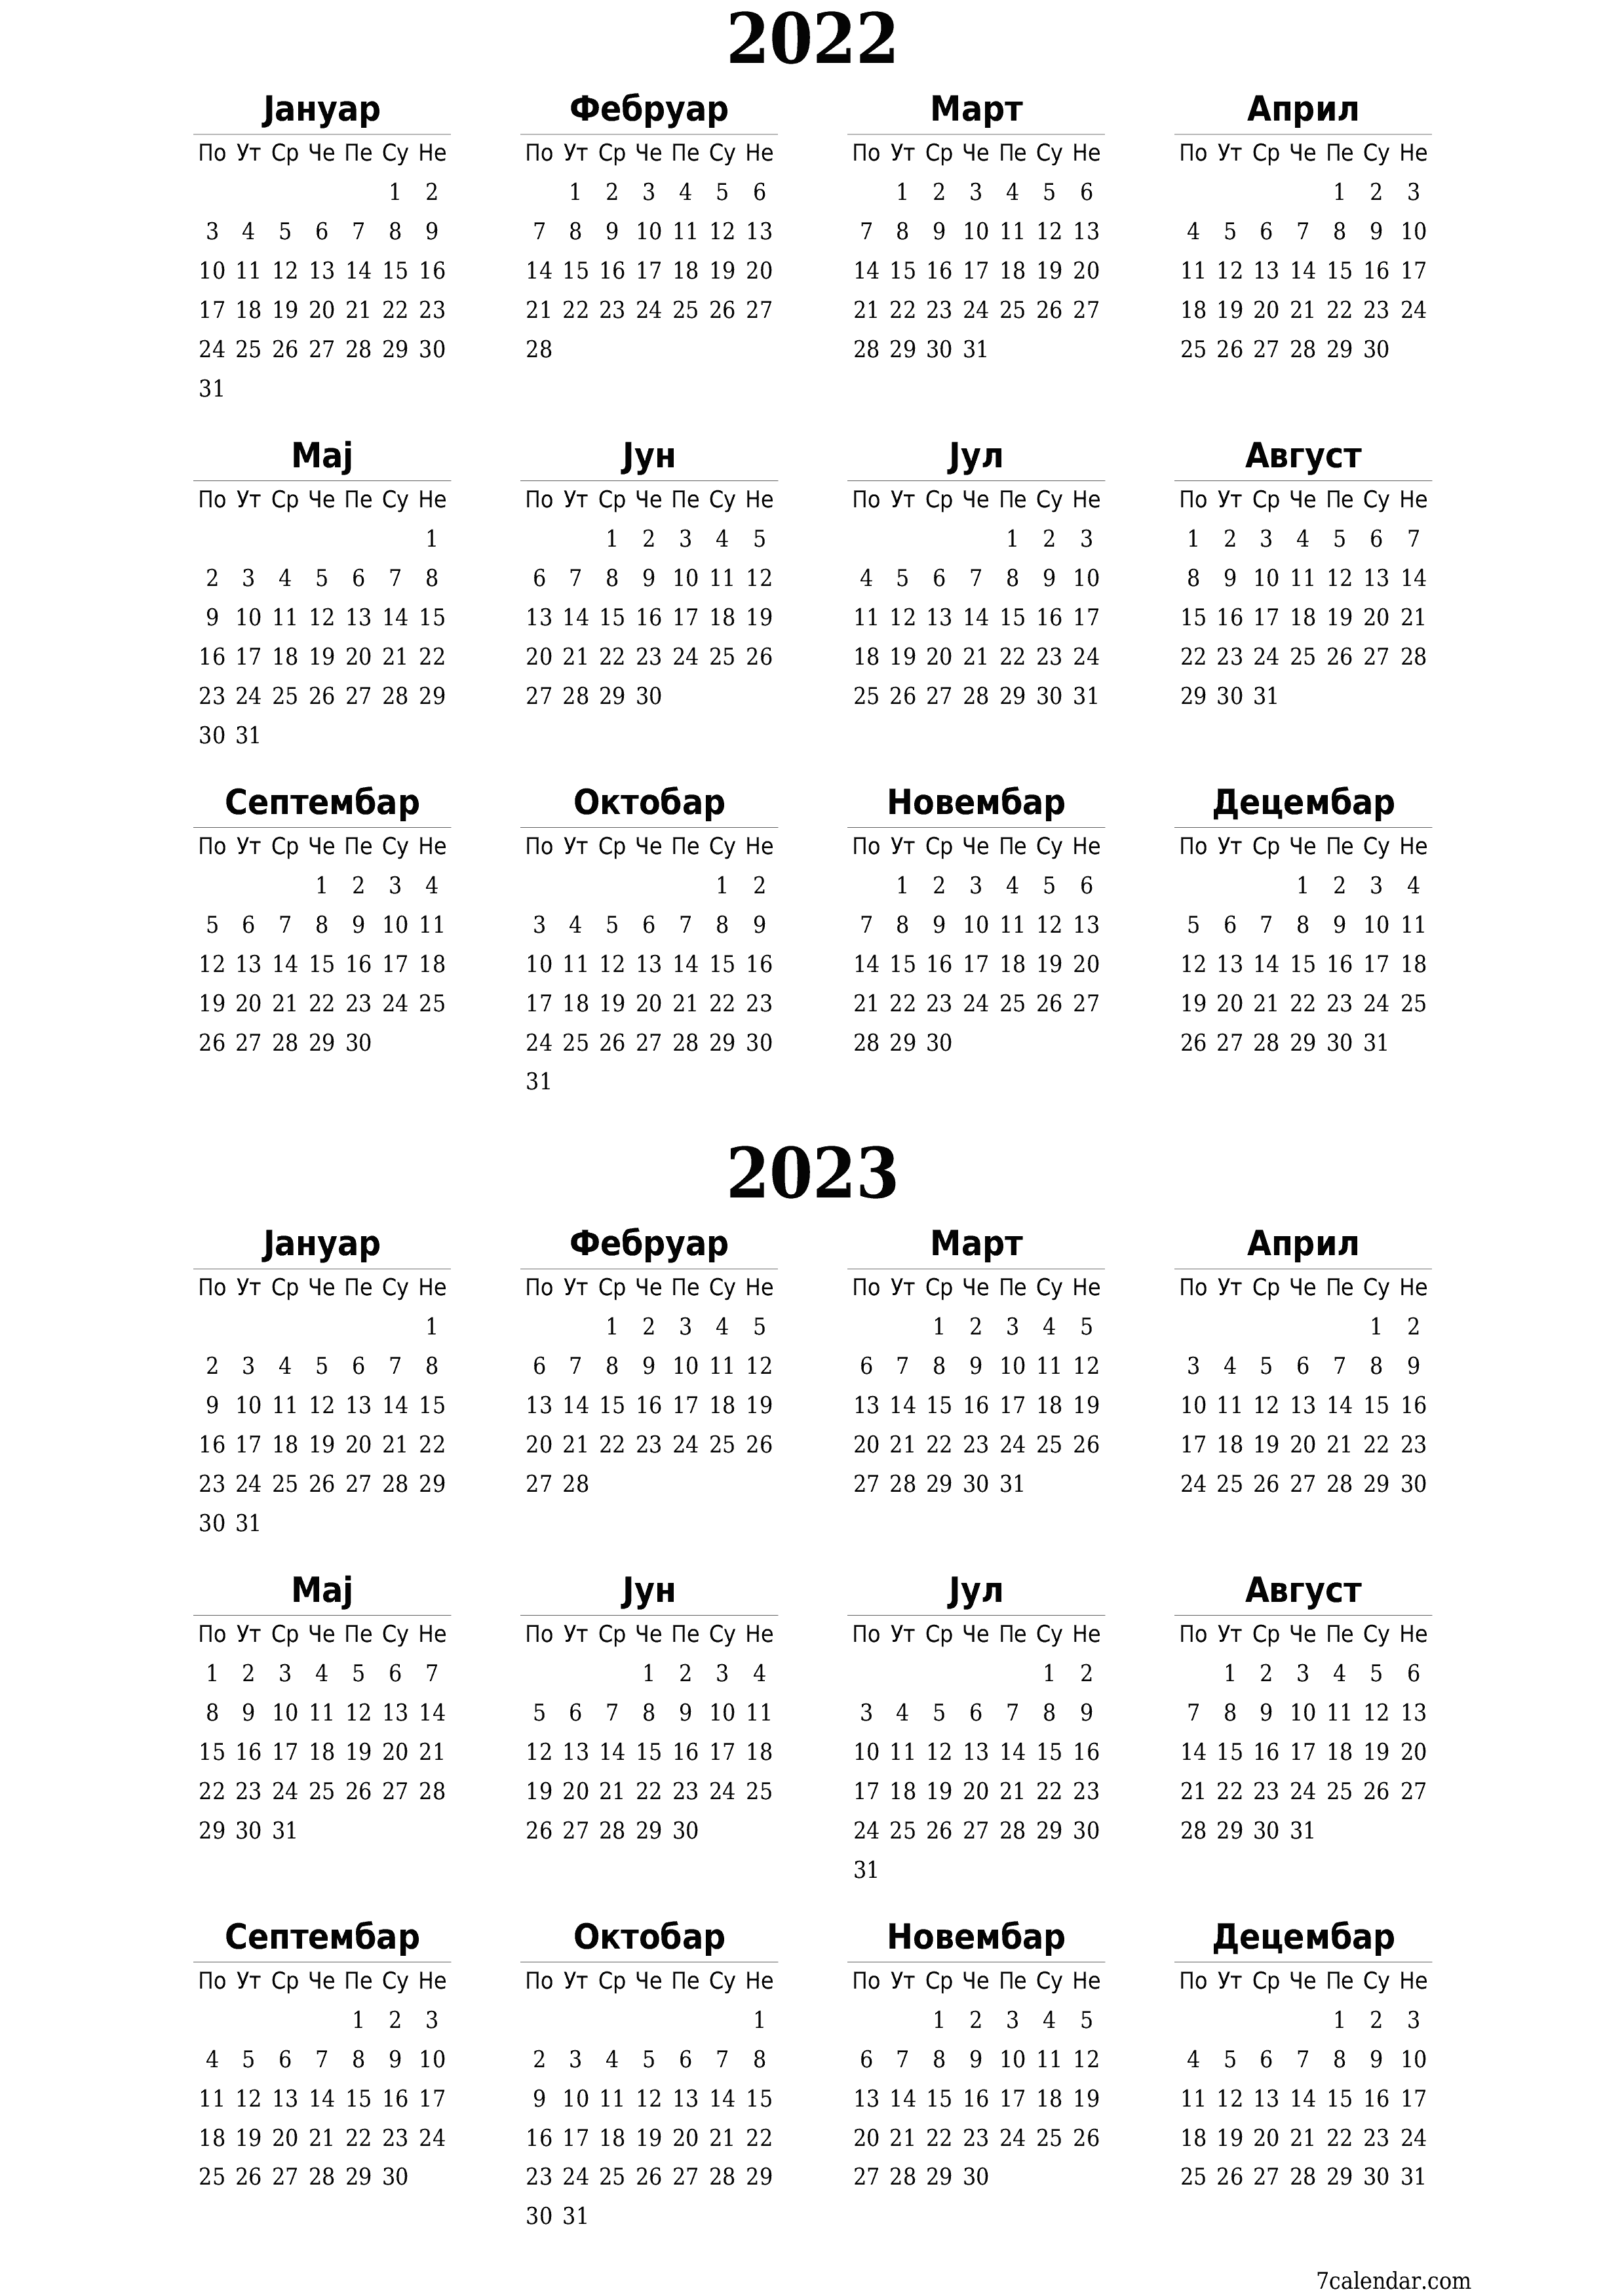  за штампање зидни шаблон а бесплатни вертикальниј Годишње календар Август (Авг) 2022